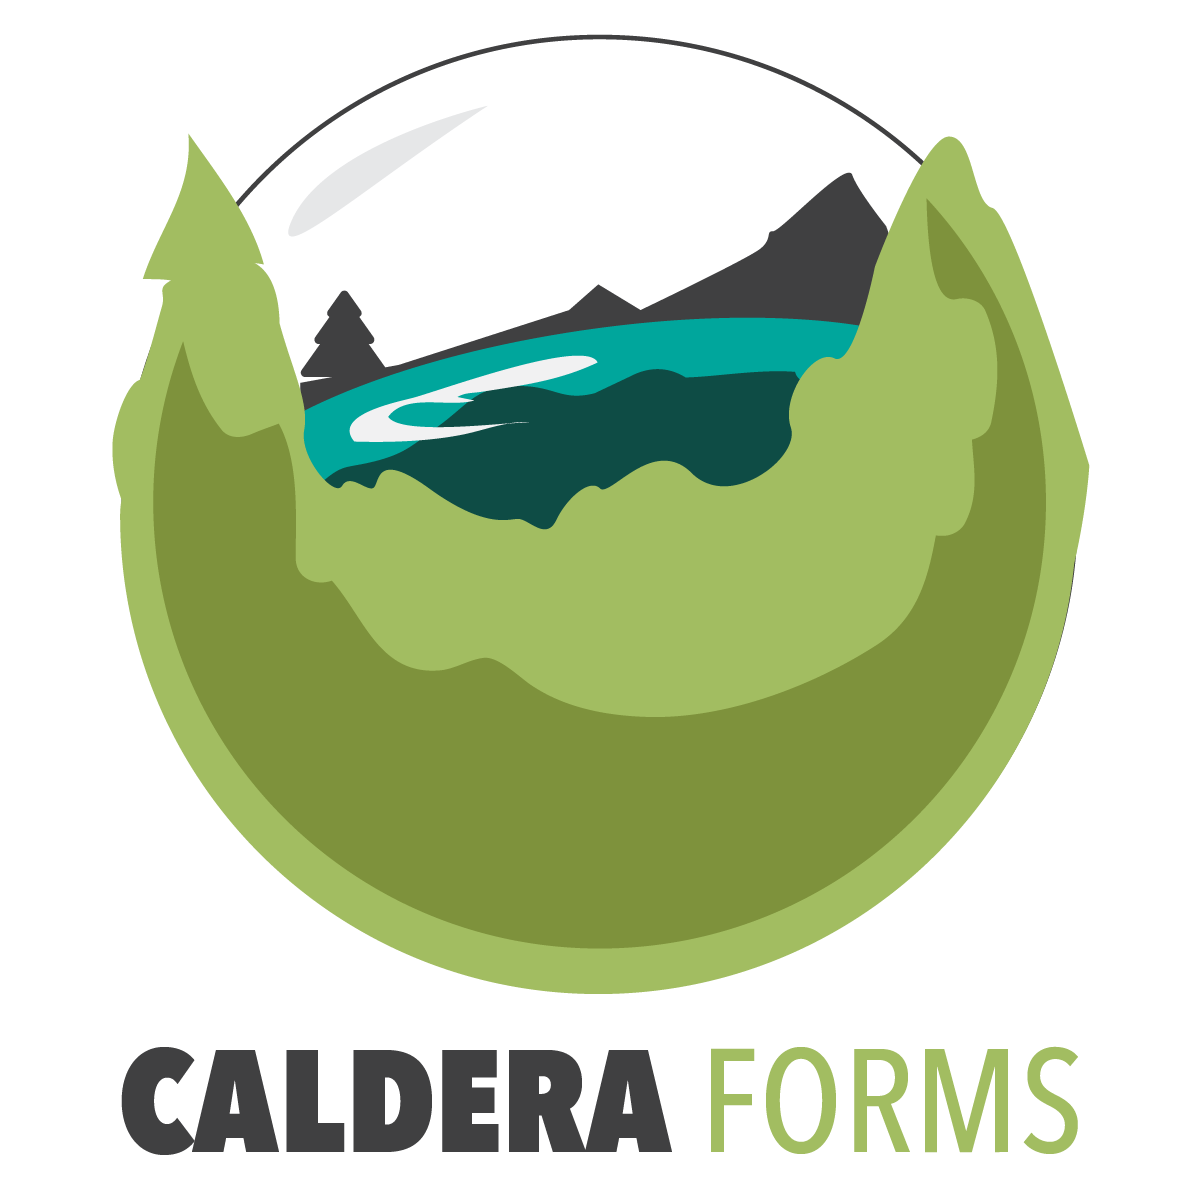 The Caldera globe logo with the words Caldera Forms below it